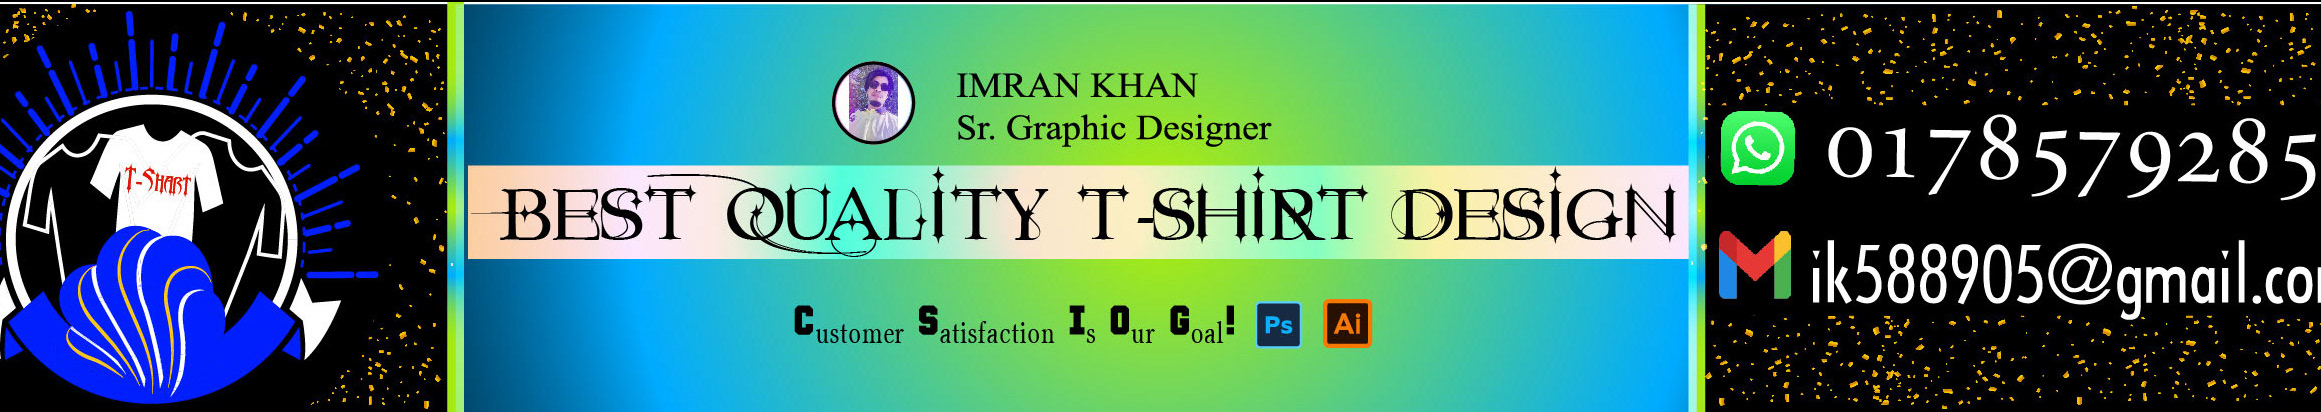 IMRAN KHAN's profile banner